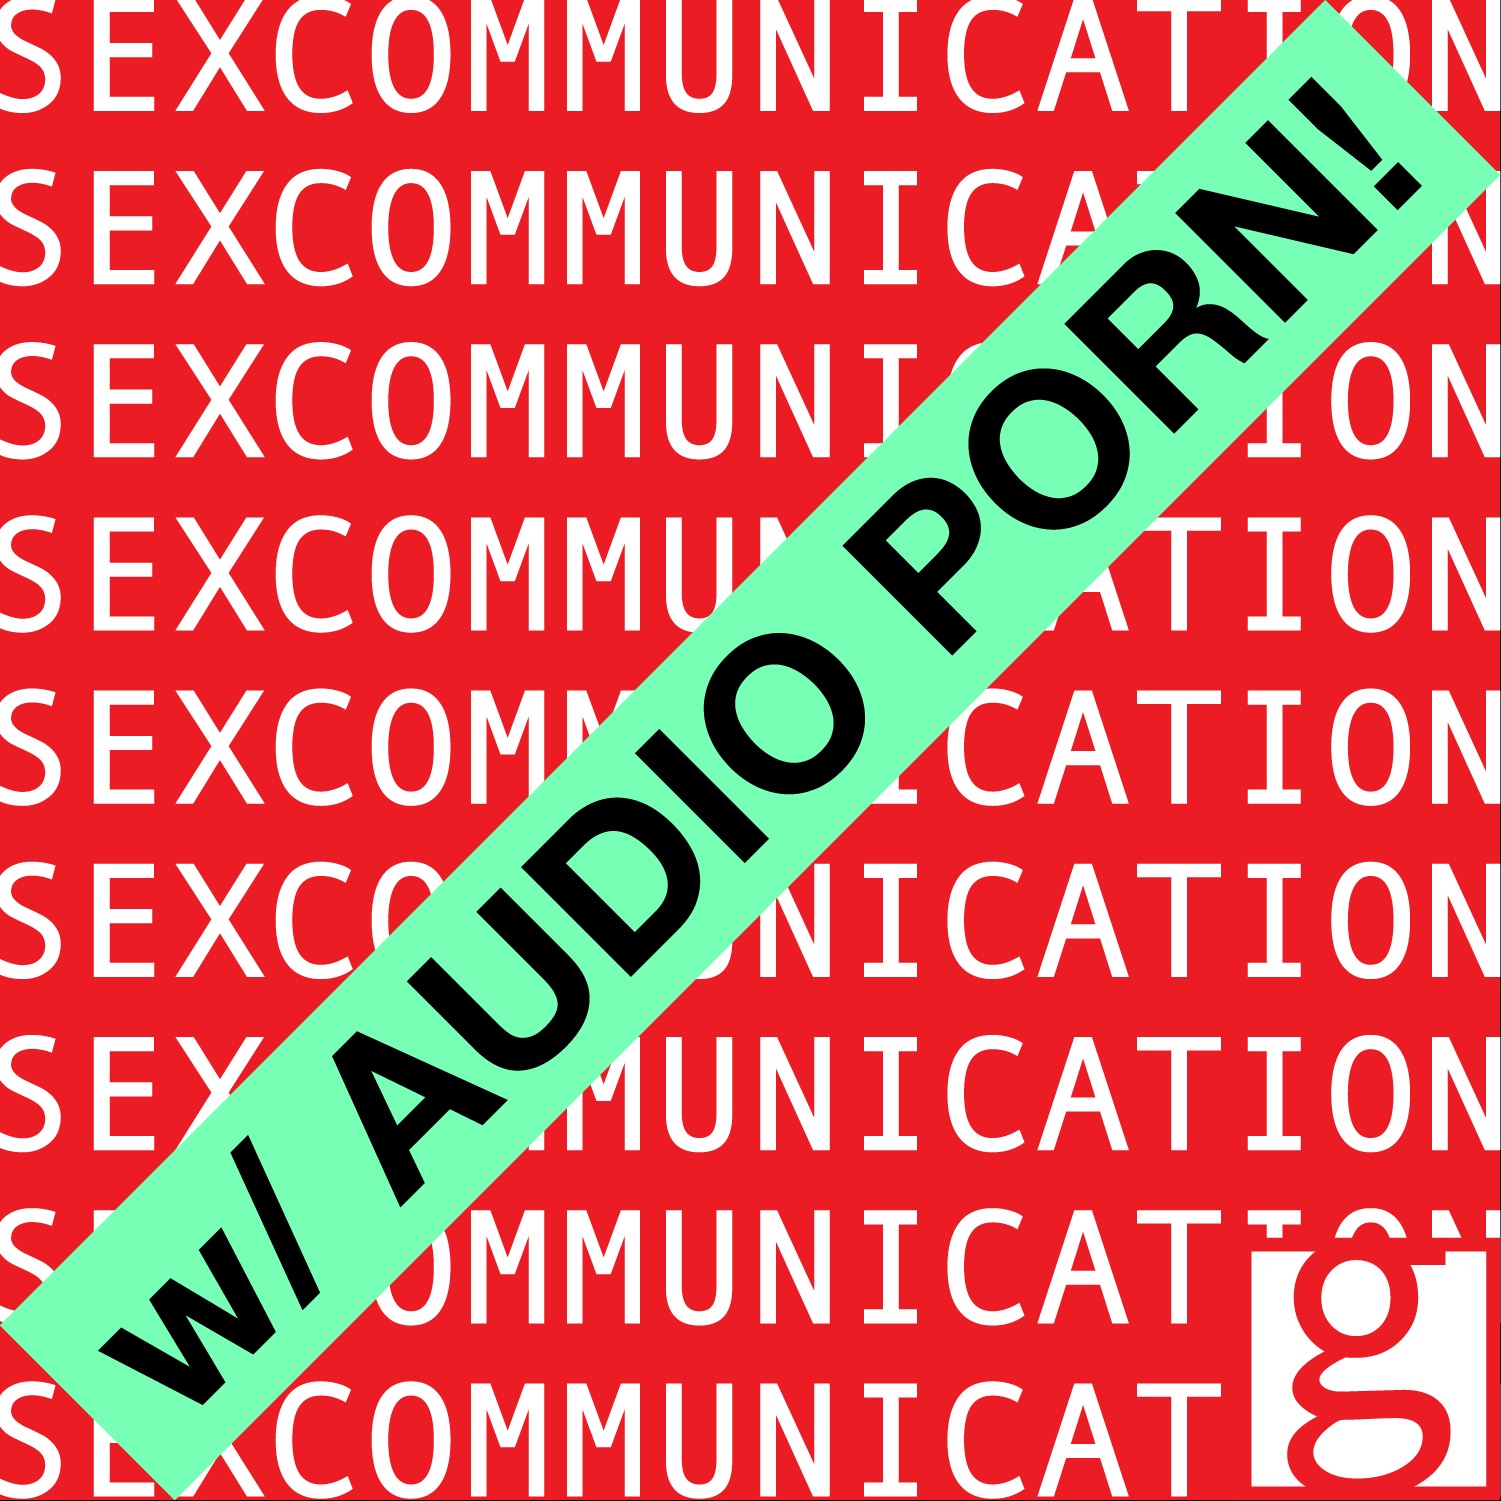 SEX COMMUNICATION RedCircle image